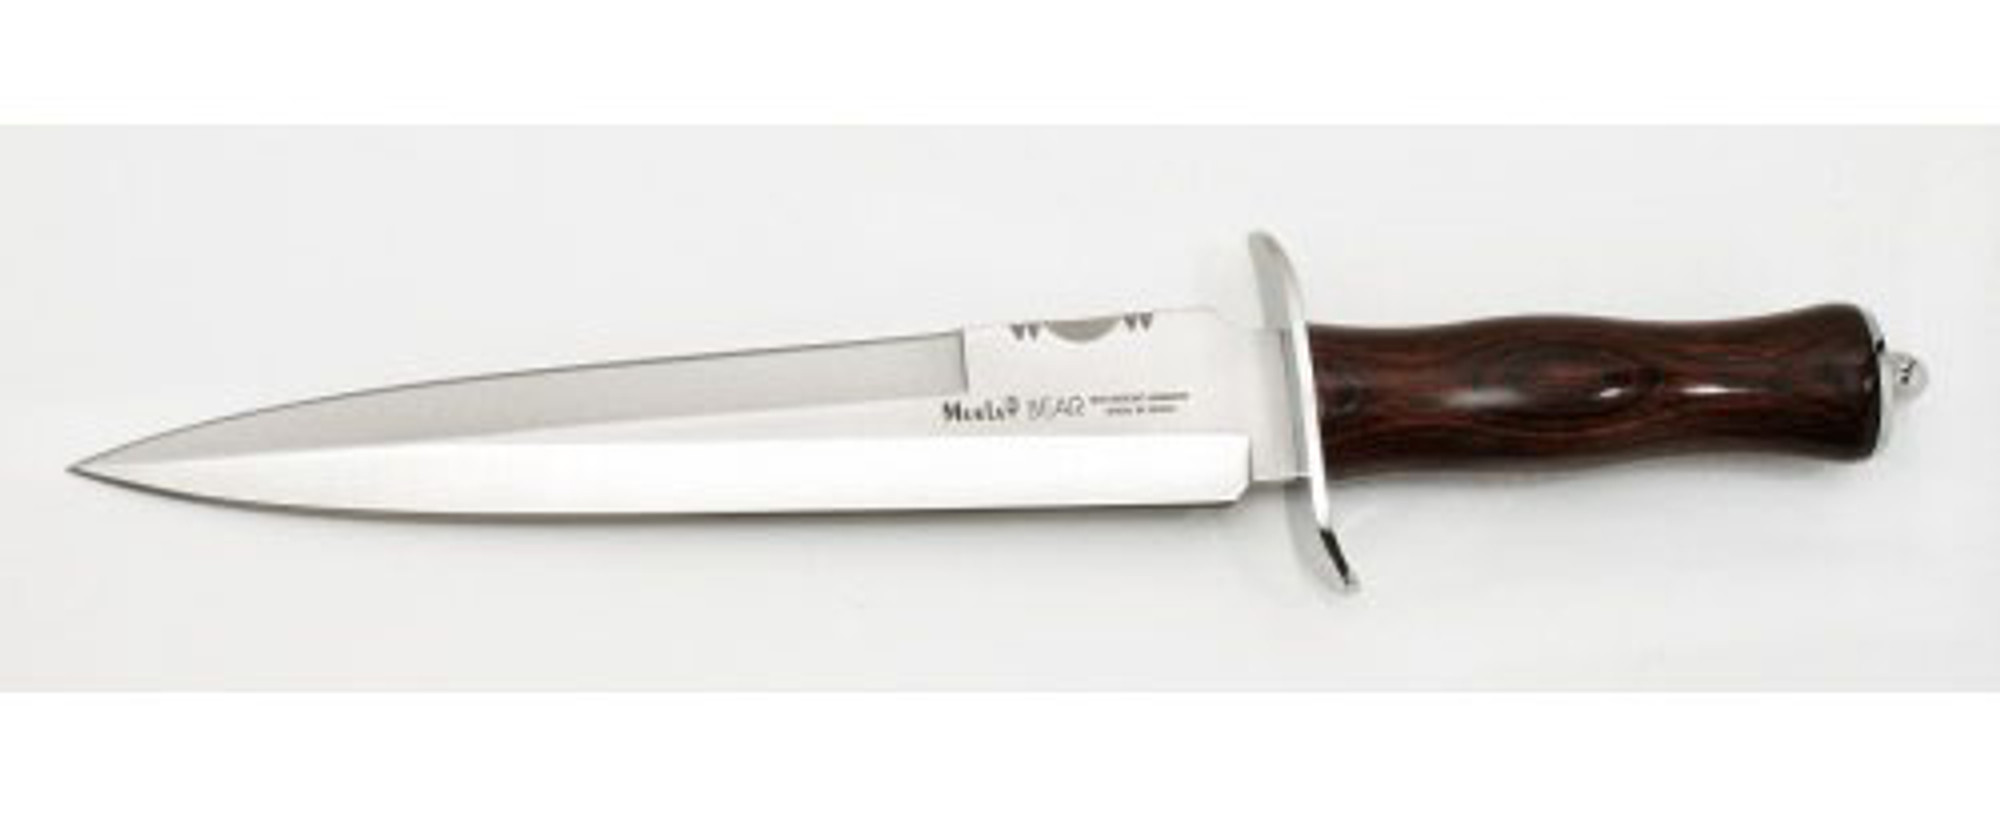 MUELA BEAR-24R, X50CrMoV15, 9-5/8" Fixed Blade Hunting Knife, Pakkawood Handle